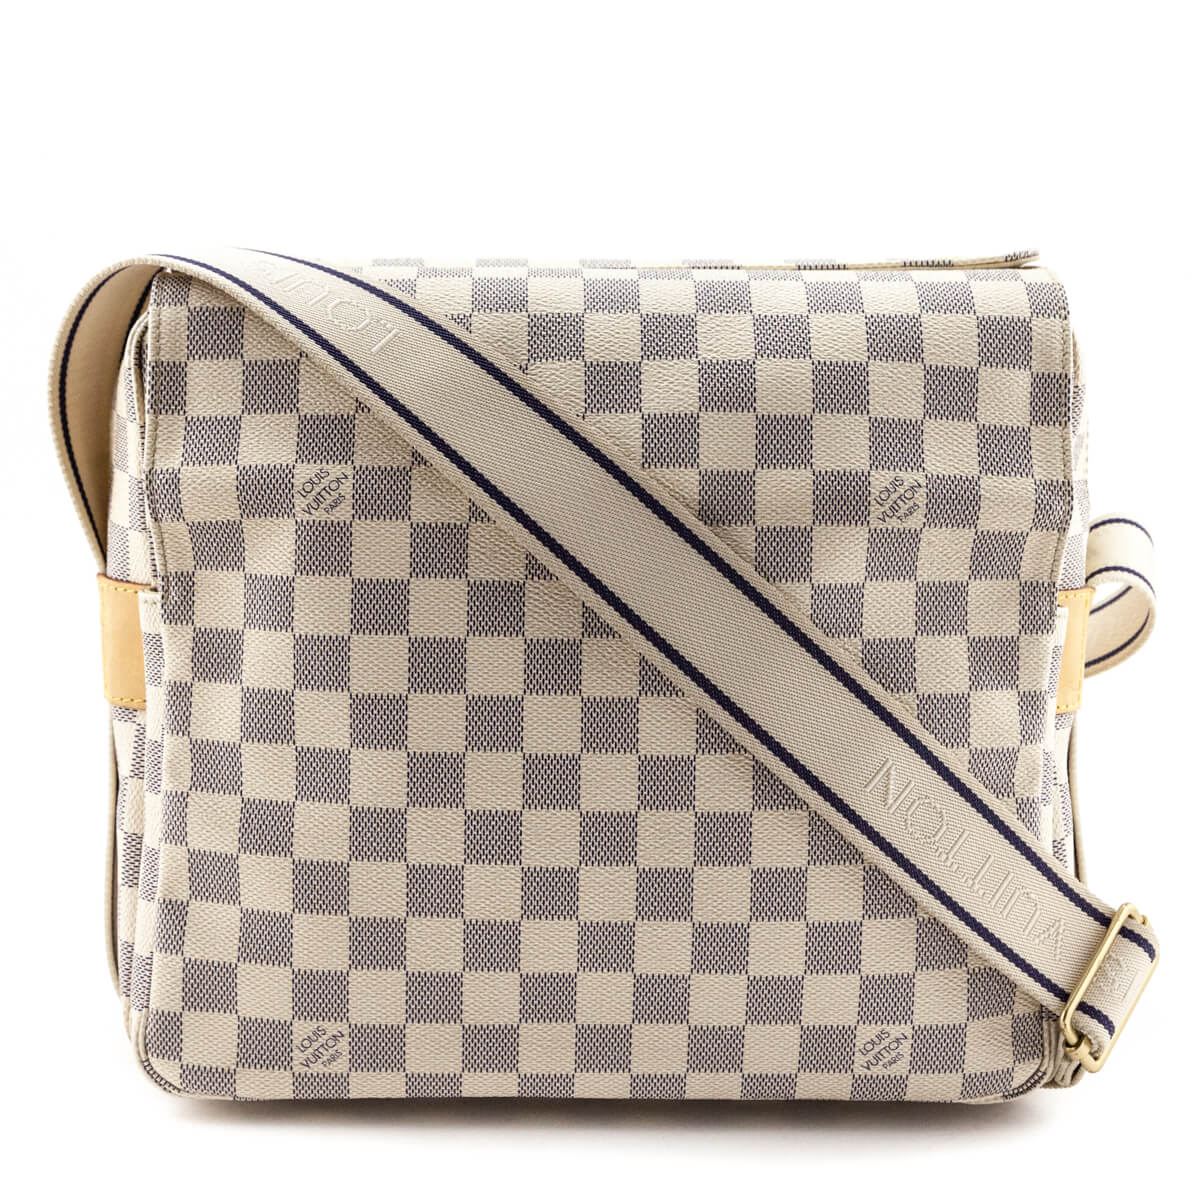 Louis Vuitton Louis Vuitton Damier Ebene Bags & Snap Handbags for Women, Authenticity Guaranteed